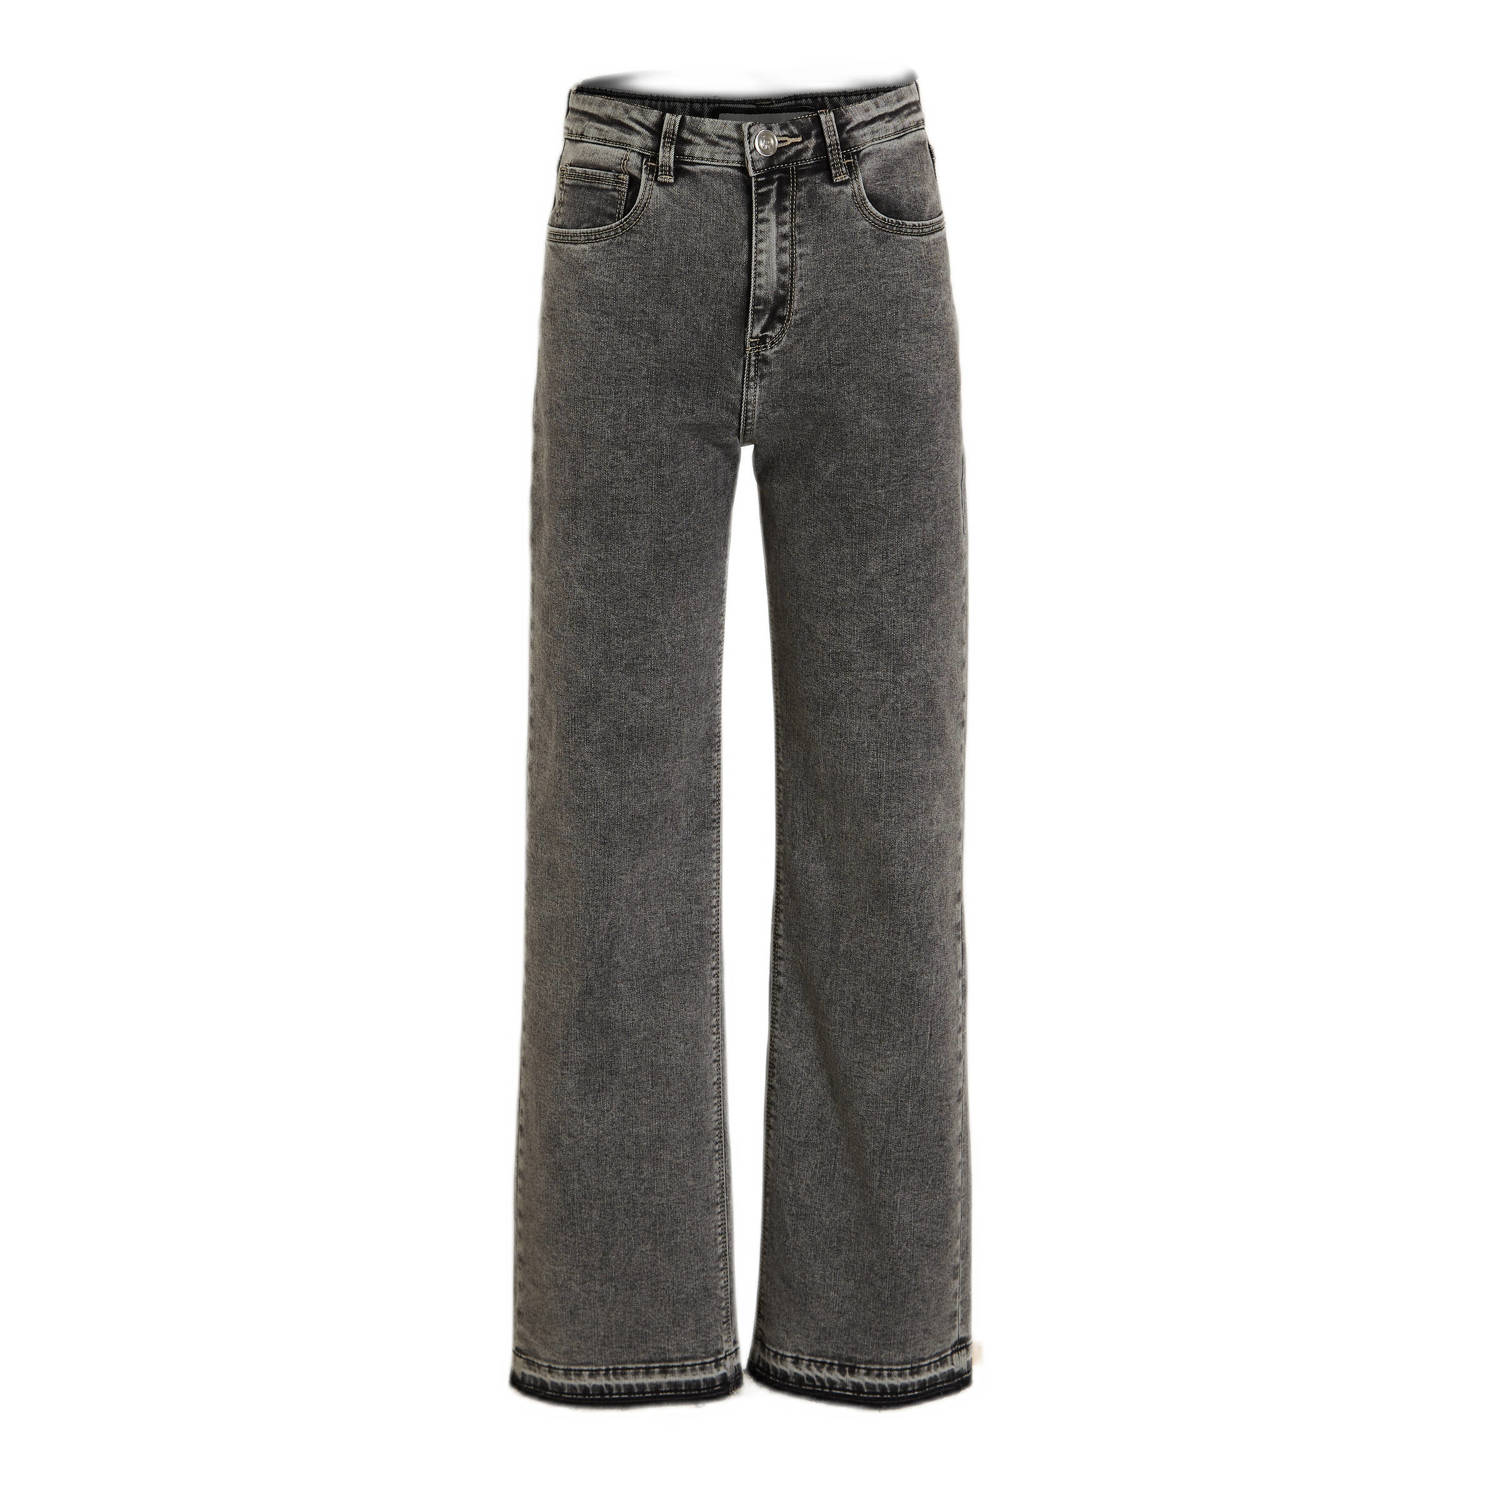 Raizzed wide leg jeans vintage grey Grijs Stretchdenim Effen 104